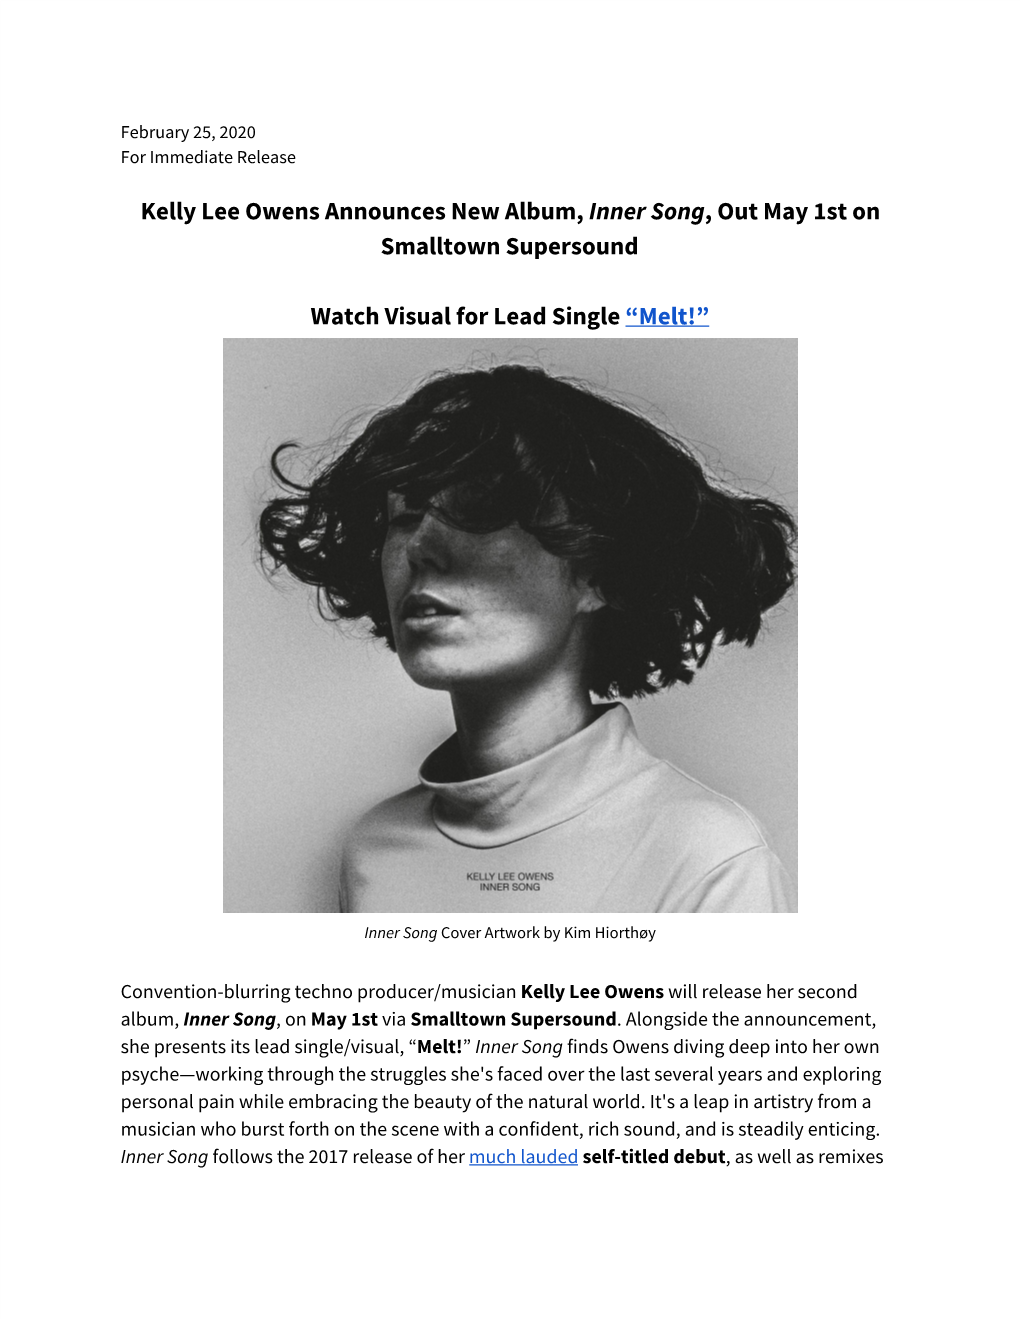 February 25, 2020 Kelly Lee Owens Announces New Album, Inner Song